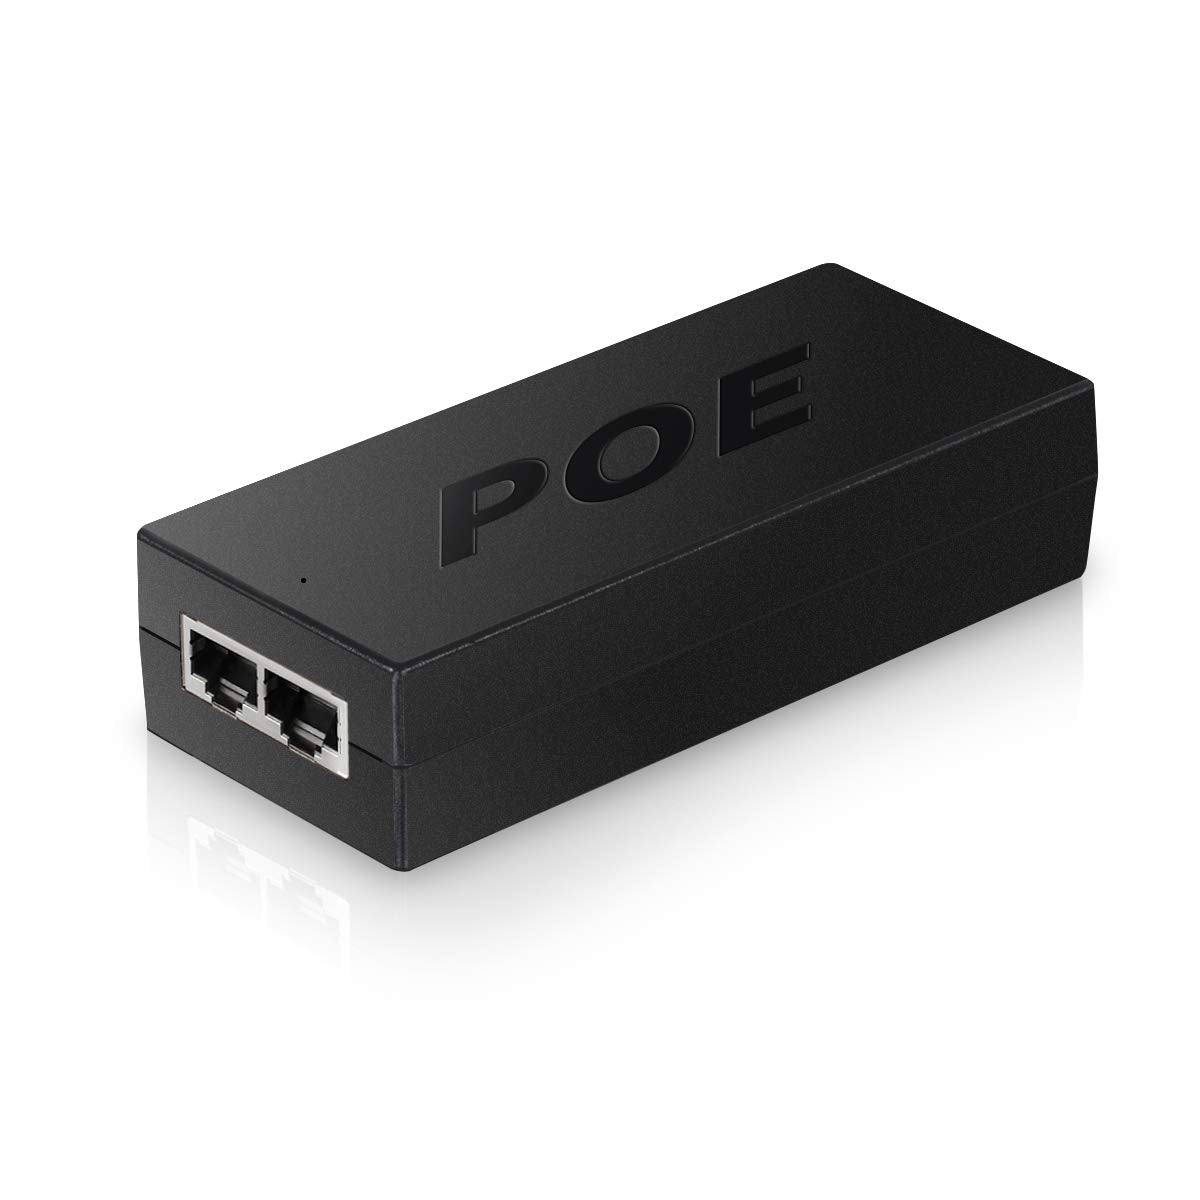 OOSSXX 8 Port Gigabit PoE Switch